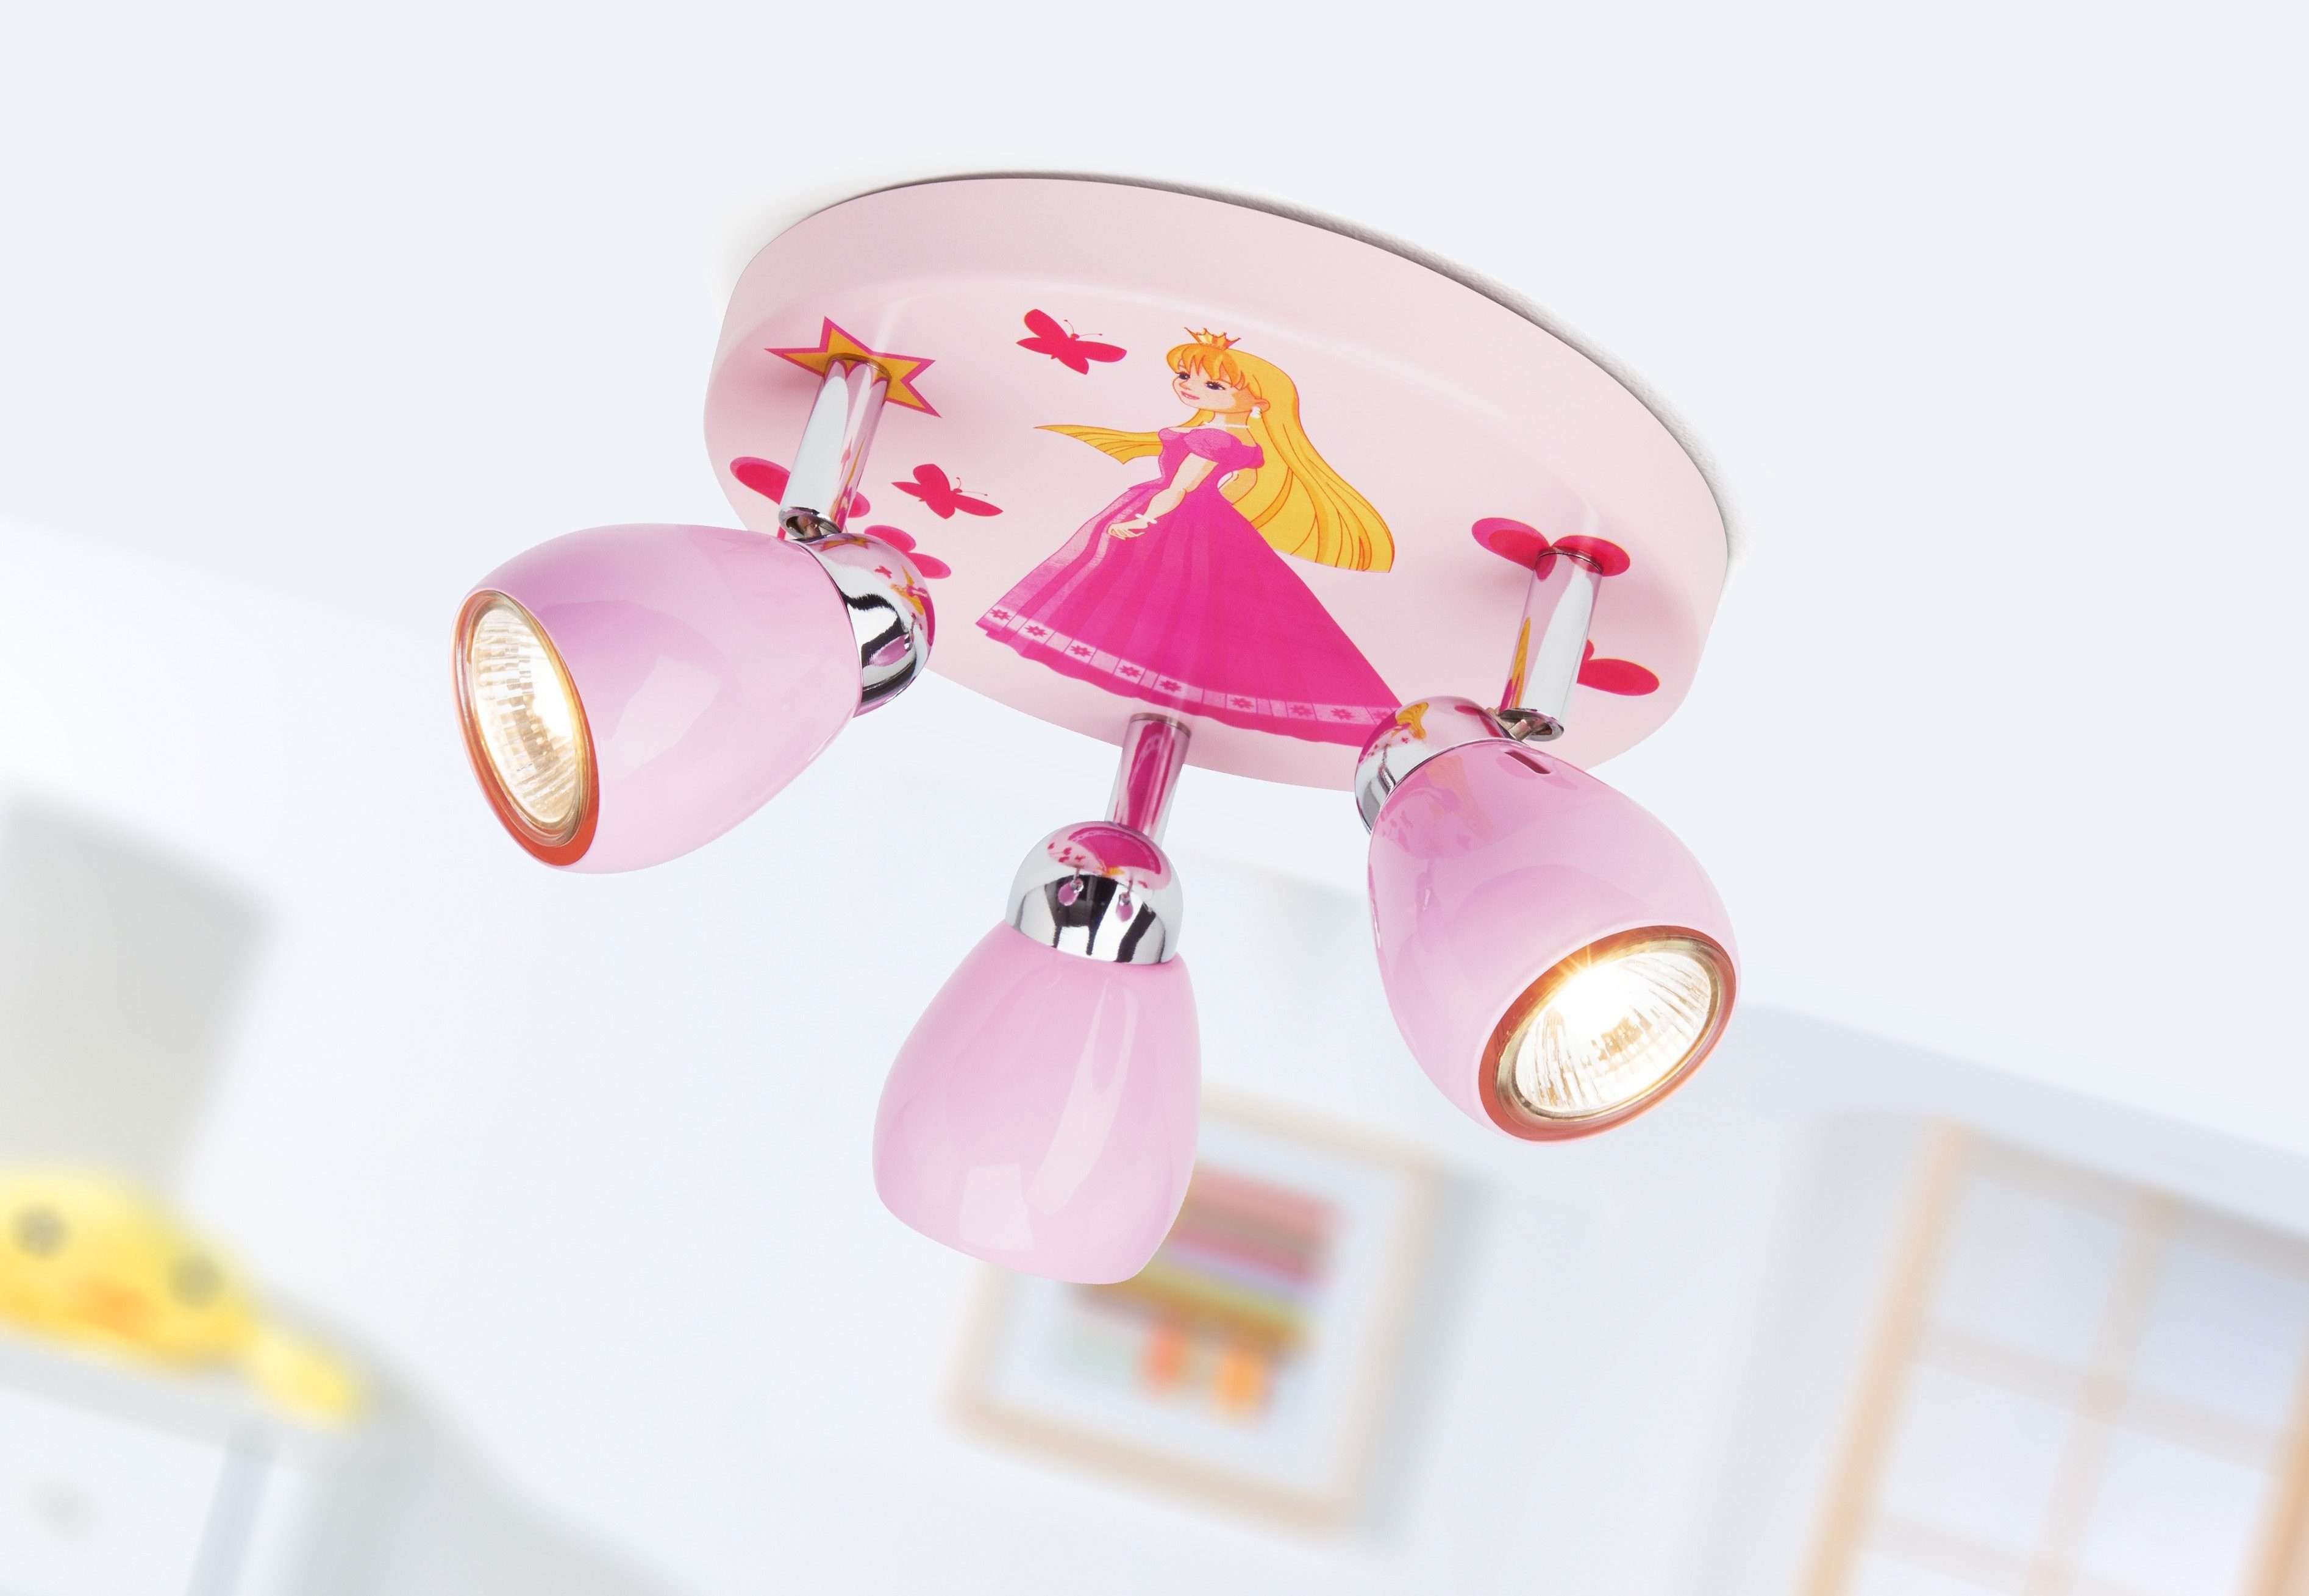 Lampe LED-PAR51, Princess, Spotrondell LED-Refl GU10, LED Princess Deckenleuchte 3flg 3W 3000K, ros3x Brilliant